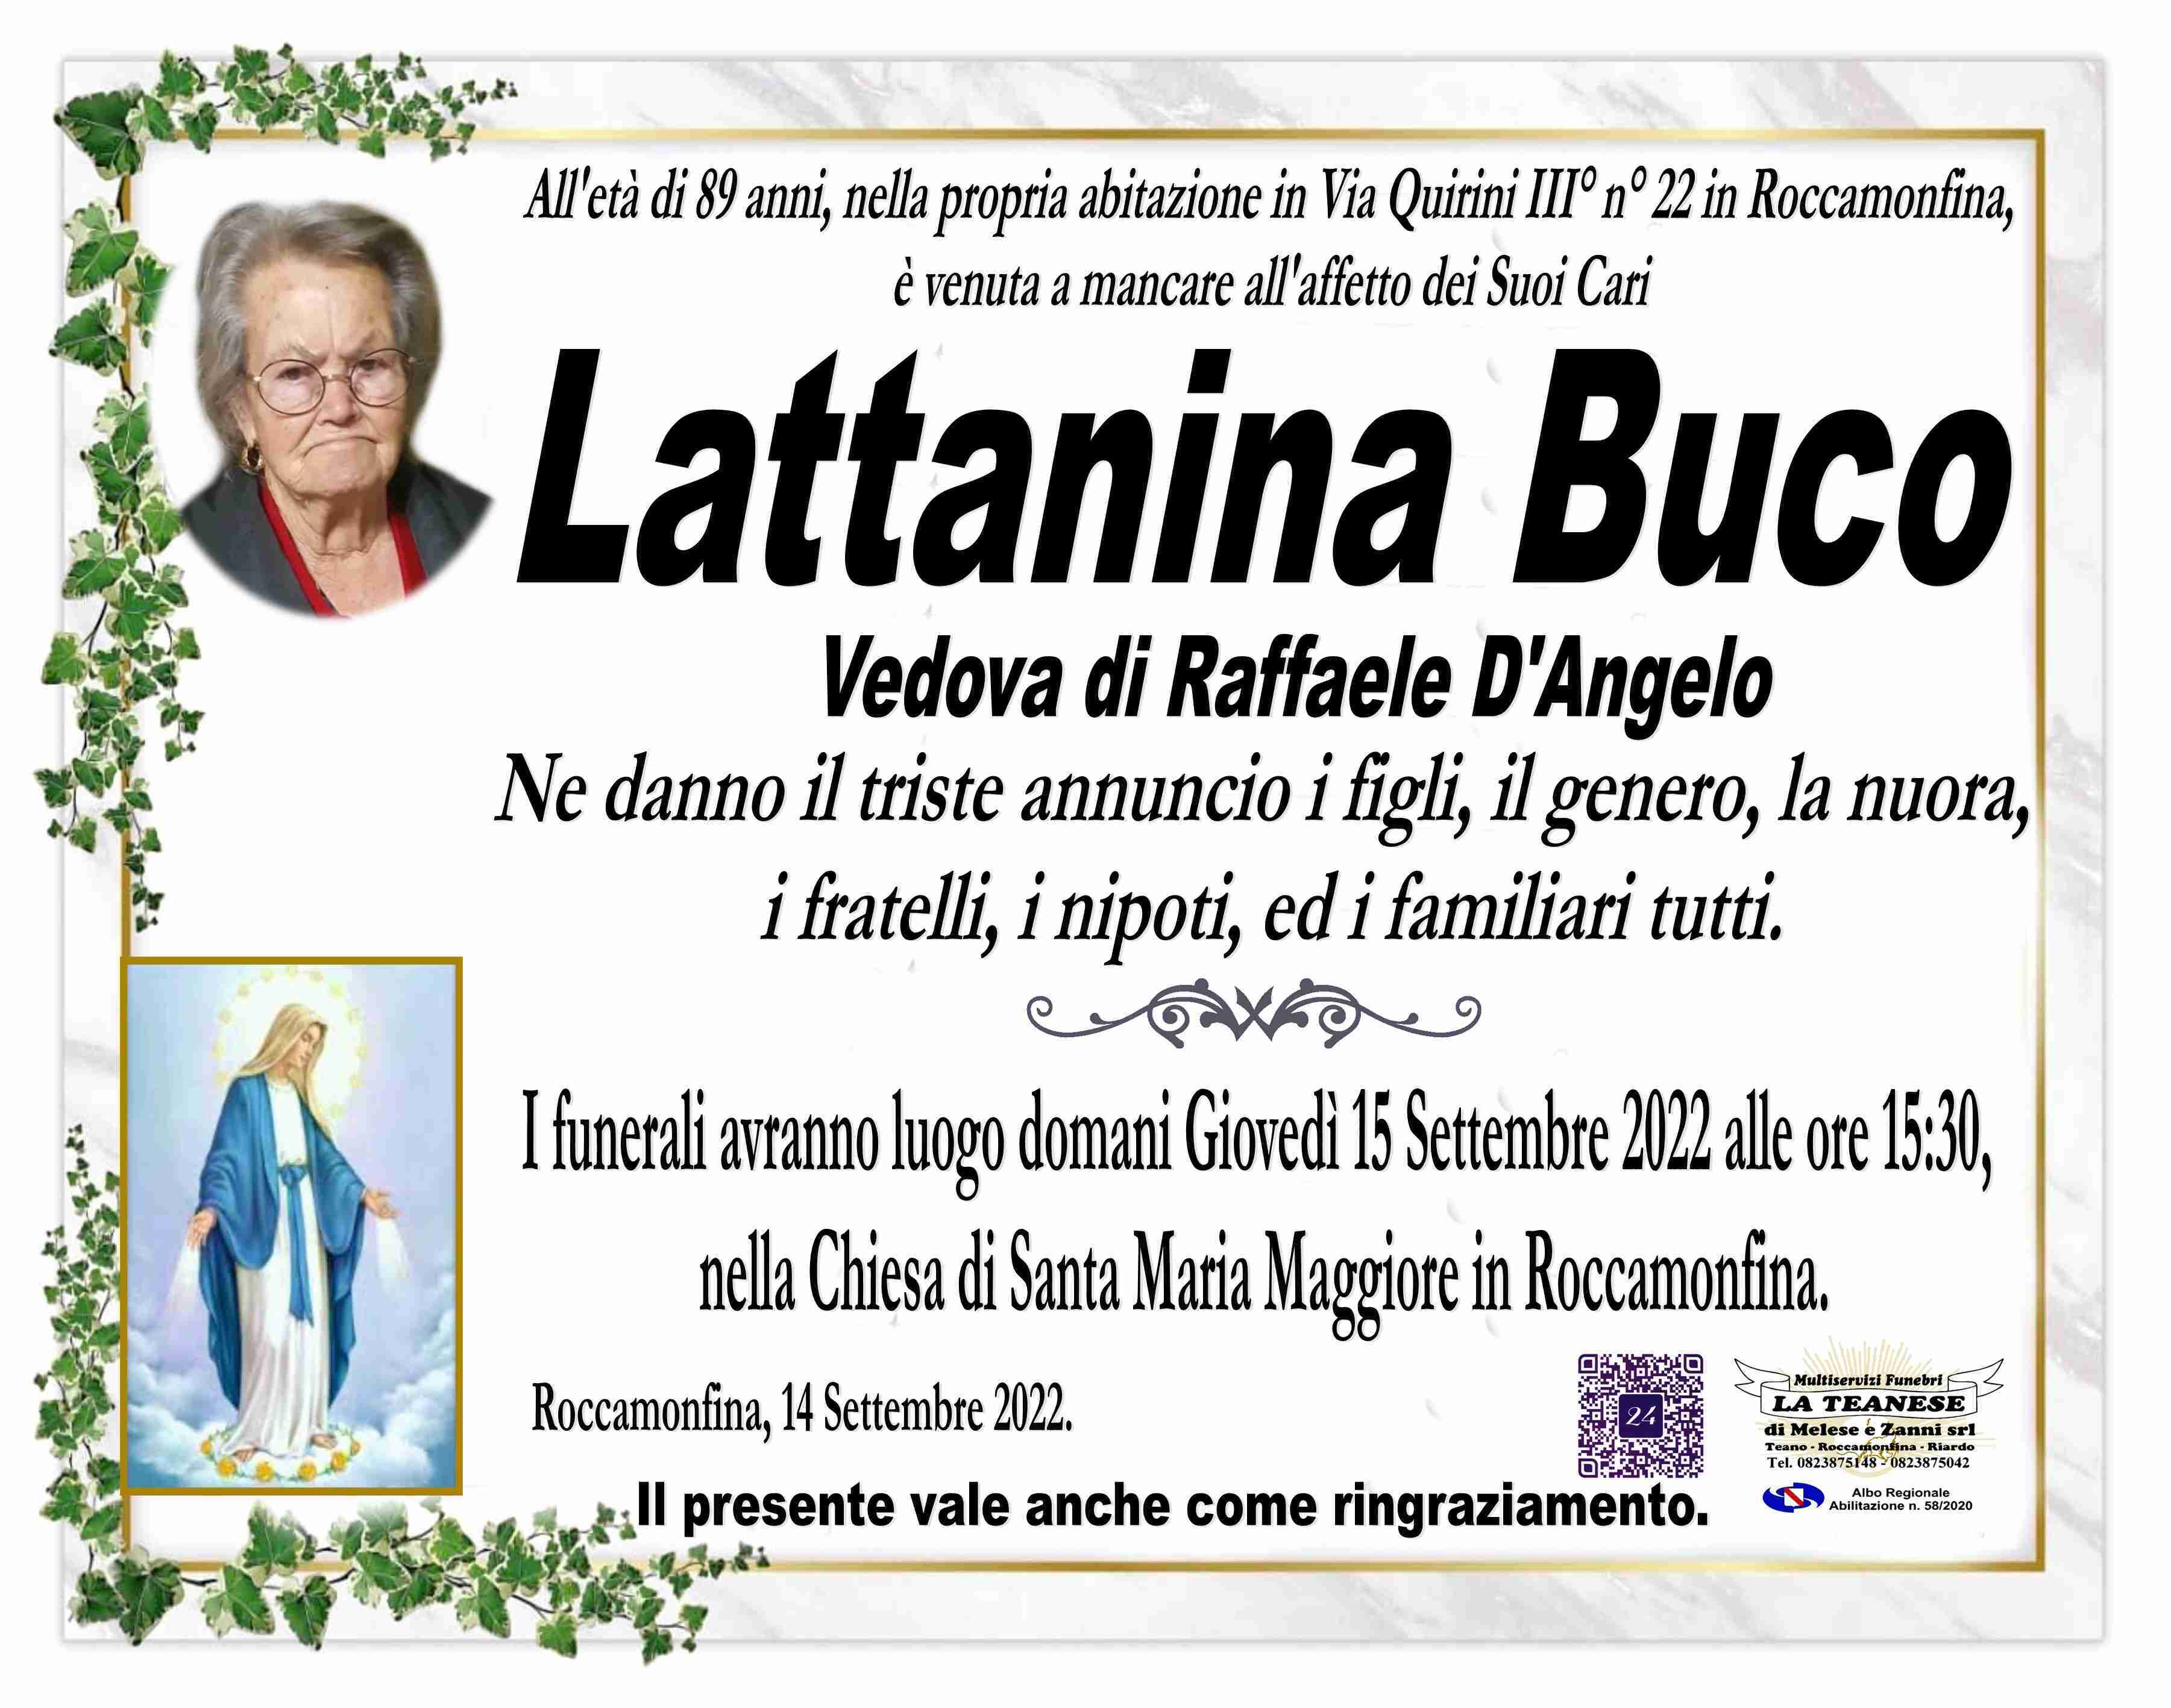 Lattanina Buco